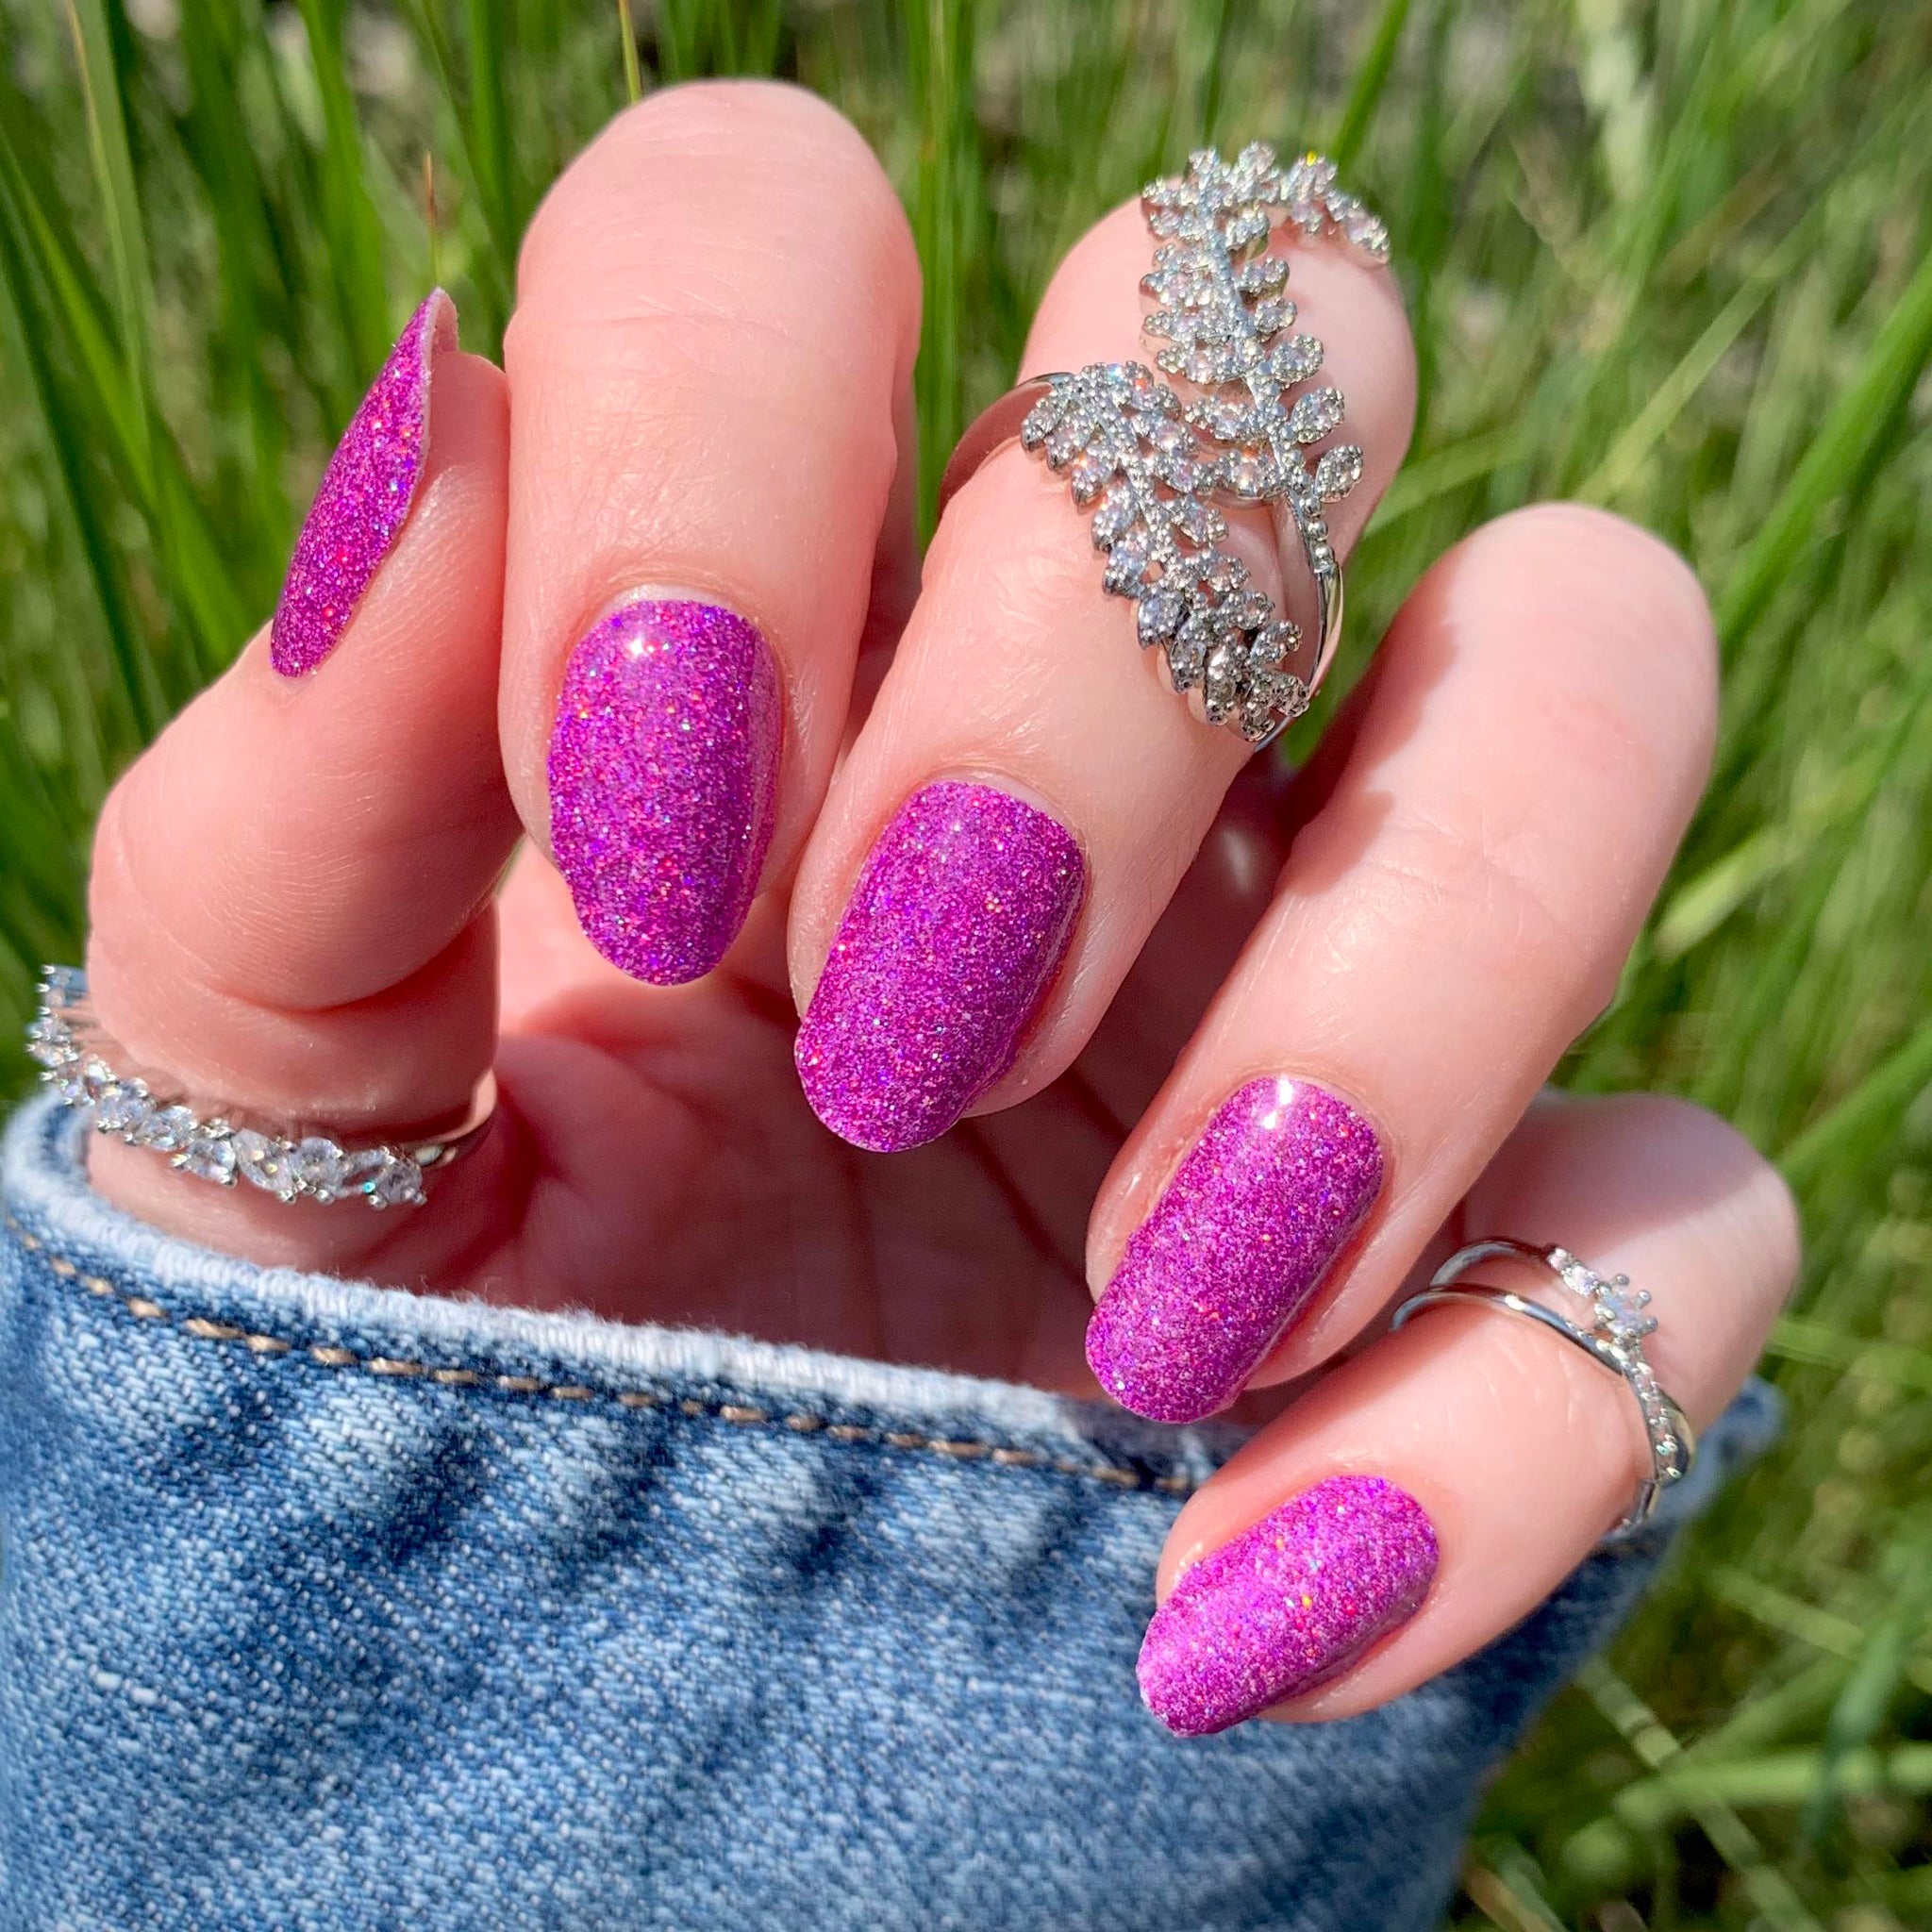 LEMEIZ Light Purple Shimmer False Nails Almond, Pastel Acrylic Lilac Press  on Nails Design, Short Stick on Nails with Colorful Glitter, 12 sizes, 24  pieces LEMEIZ-SA005 : Amazon.co.uk: Beauty